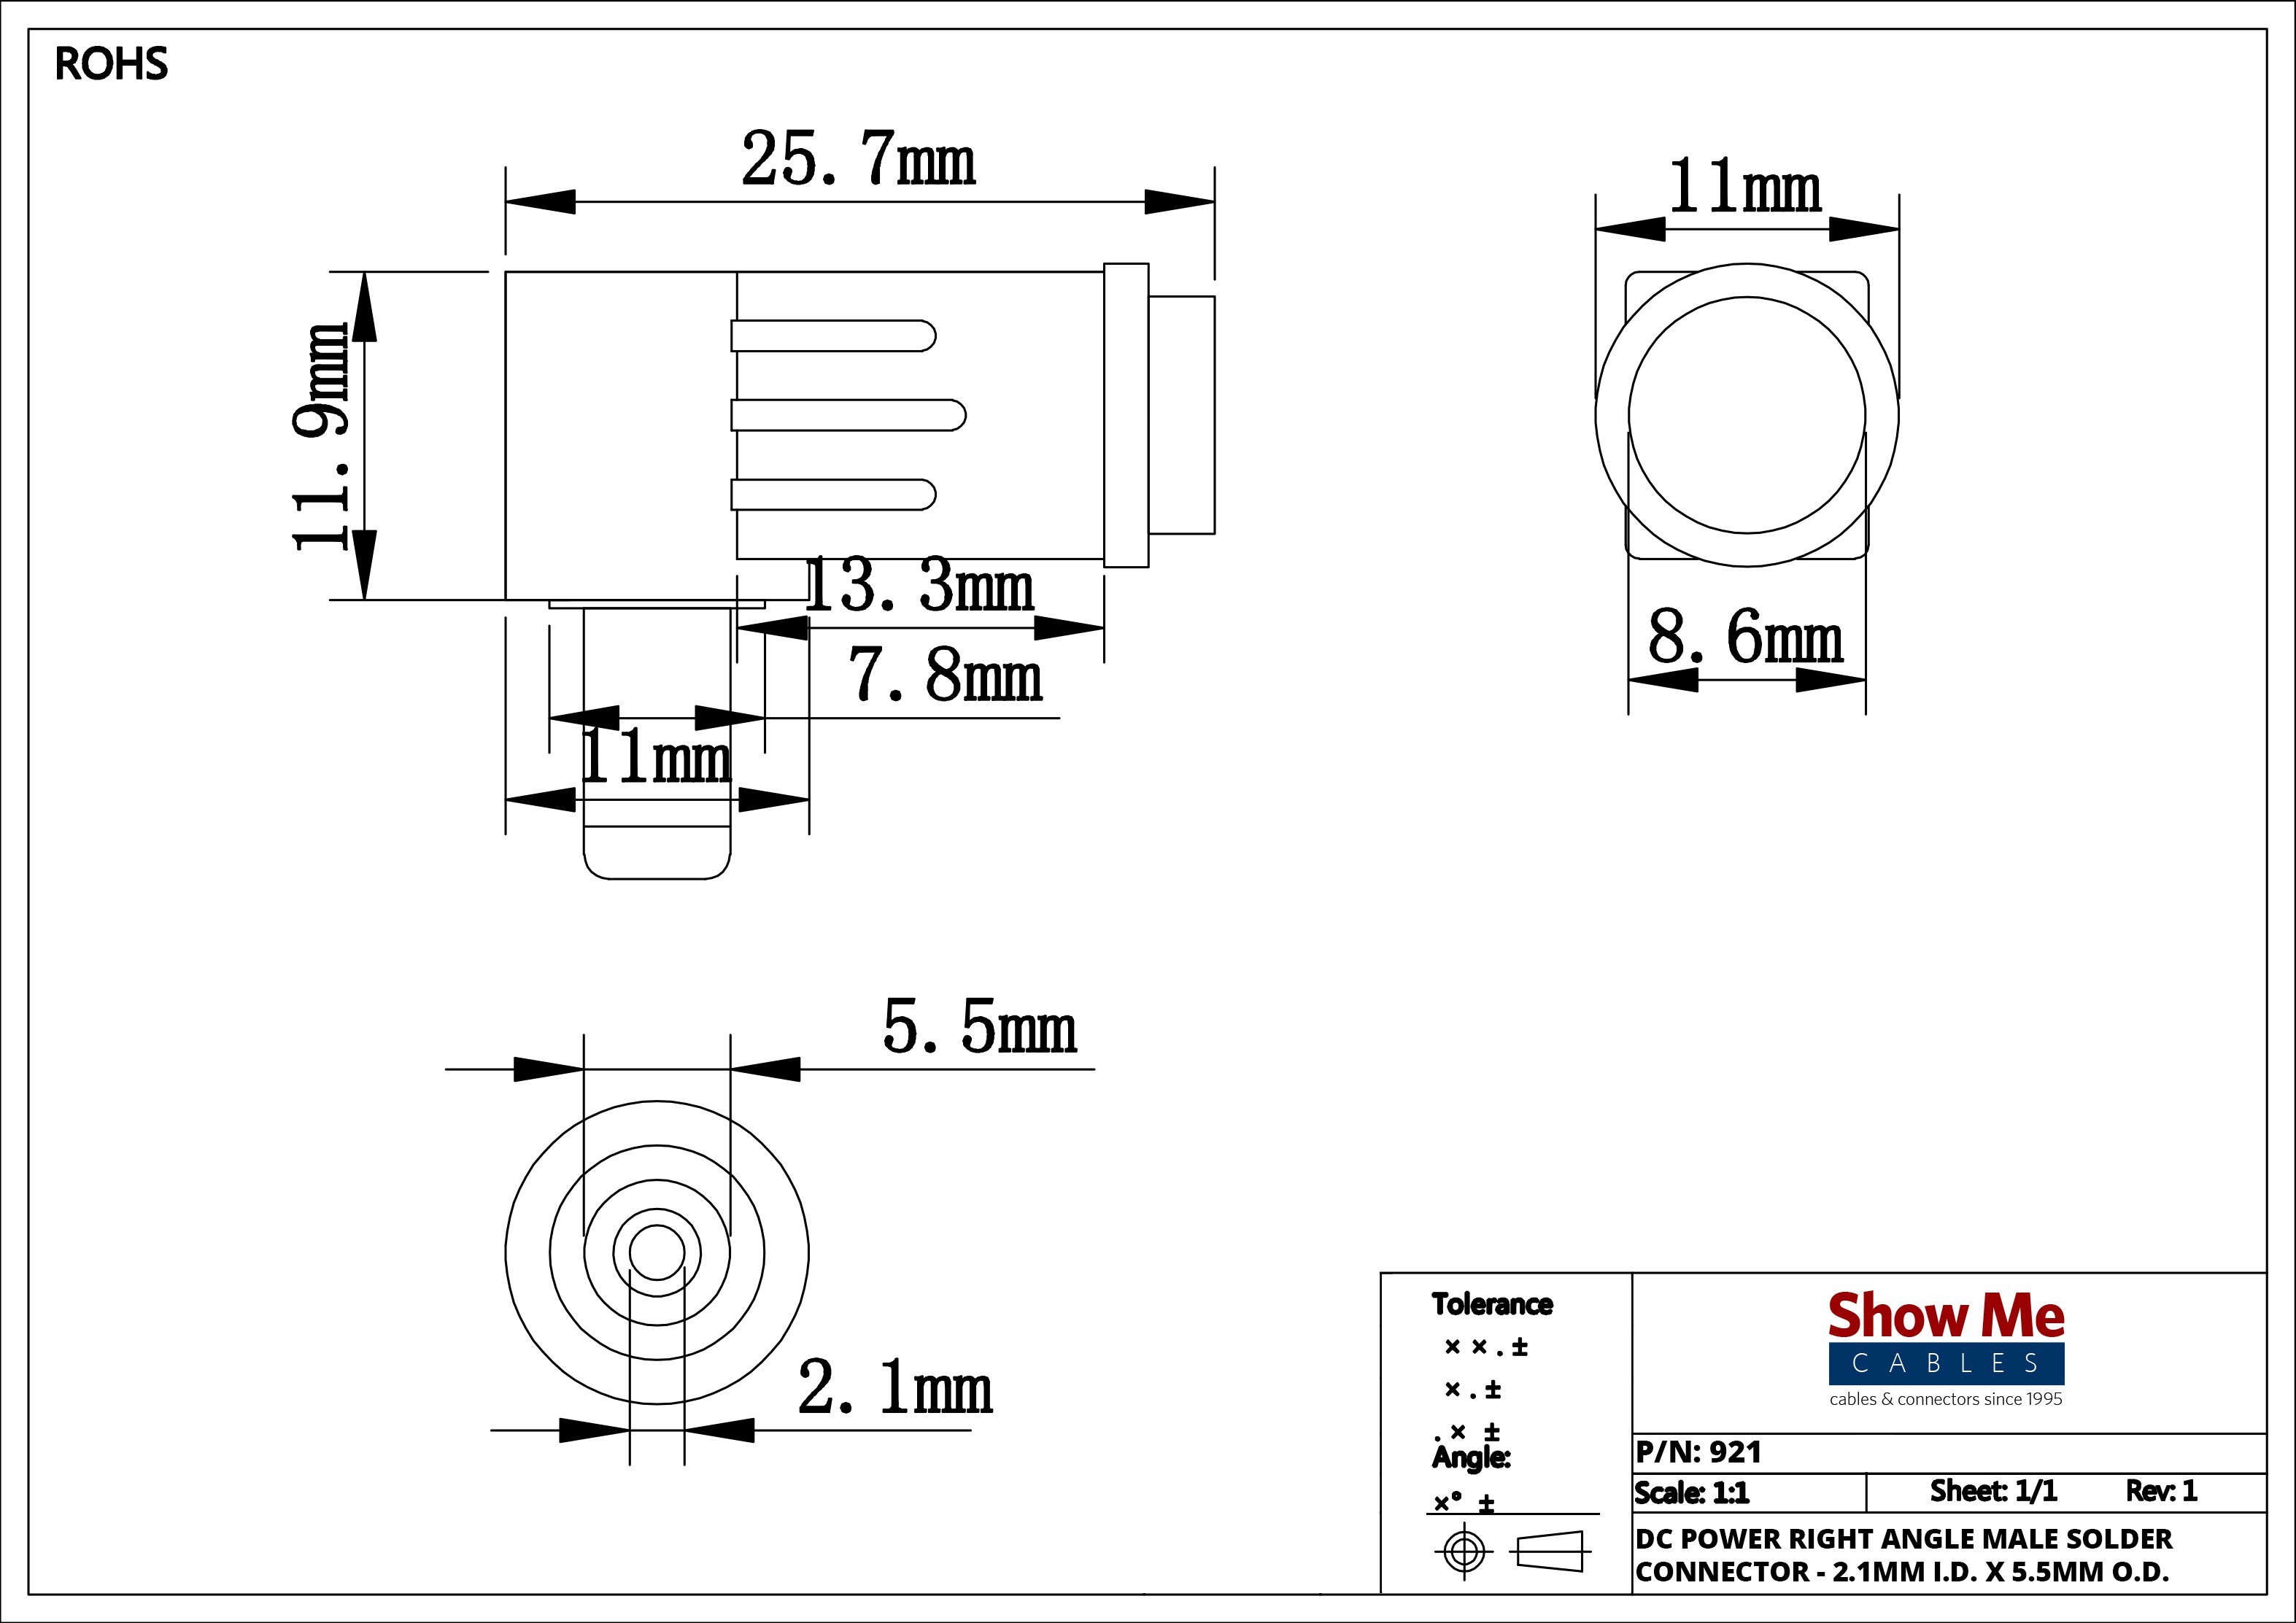 home speaker wiring diagram Collection 3 5 Mm Stereo Jack Wiring Diagram Elegant 2 5mm DOWNLOAD Wiring Diagram